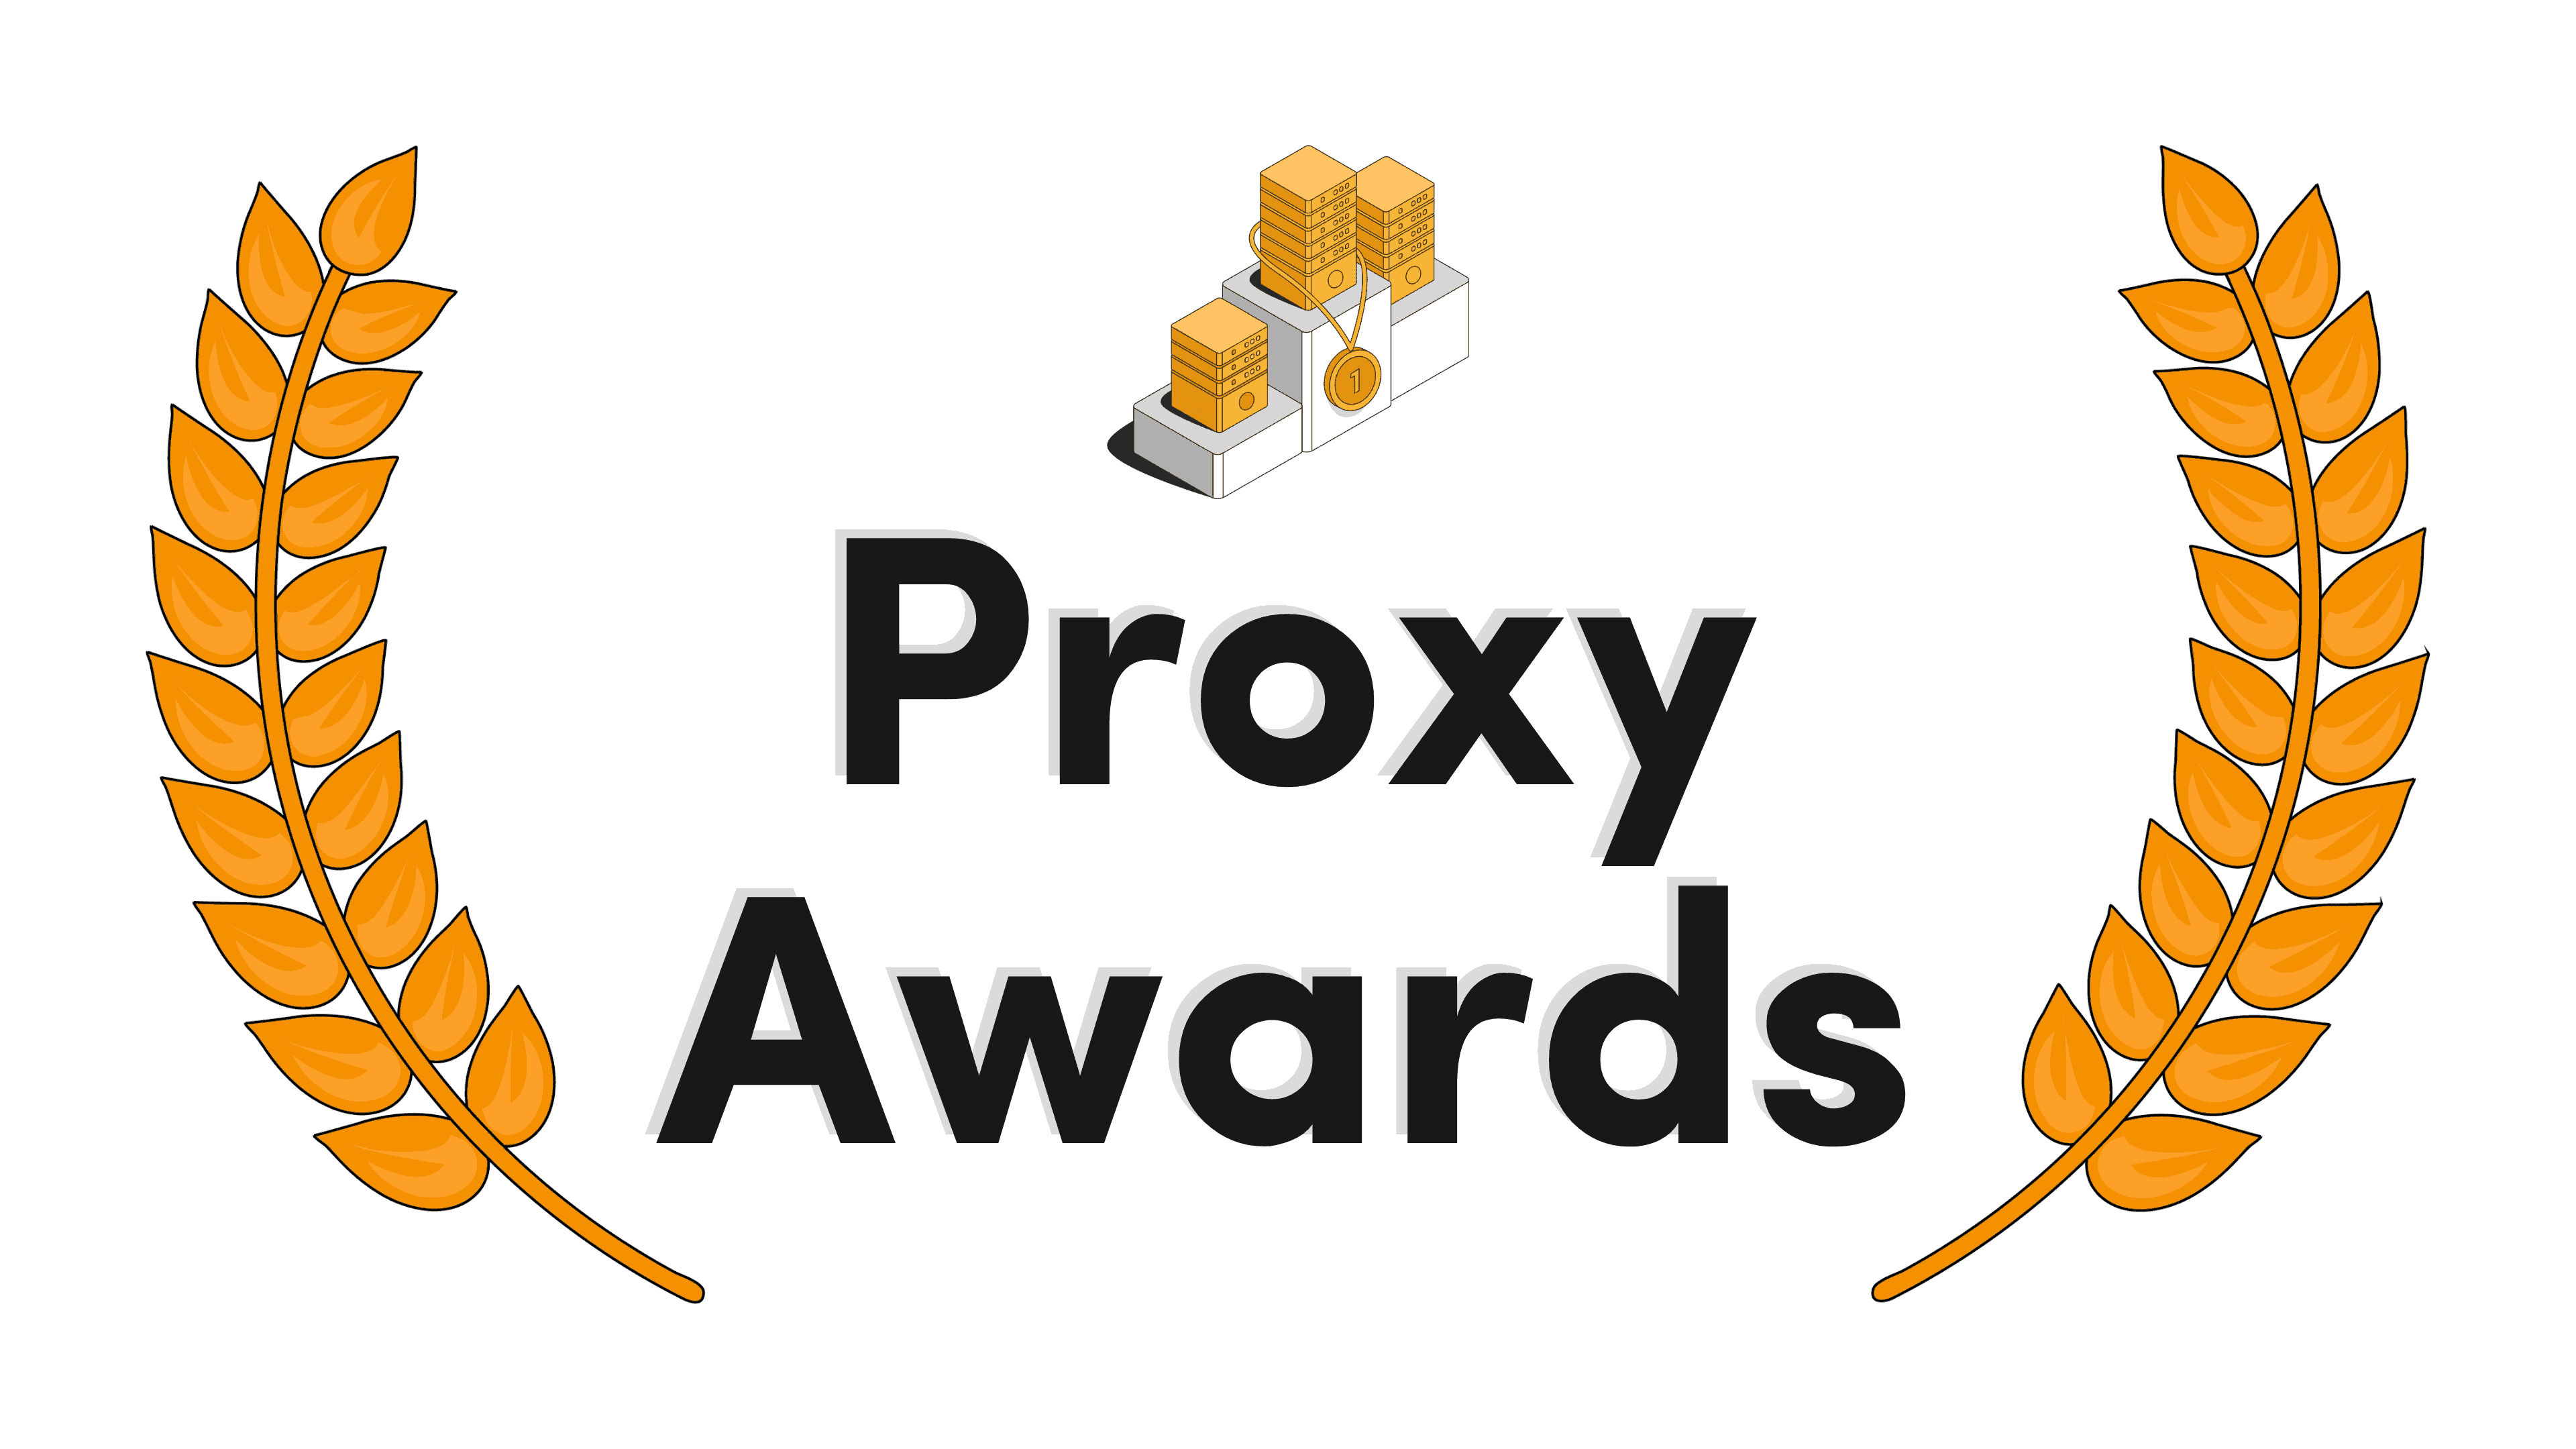 Proxy awards logo